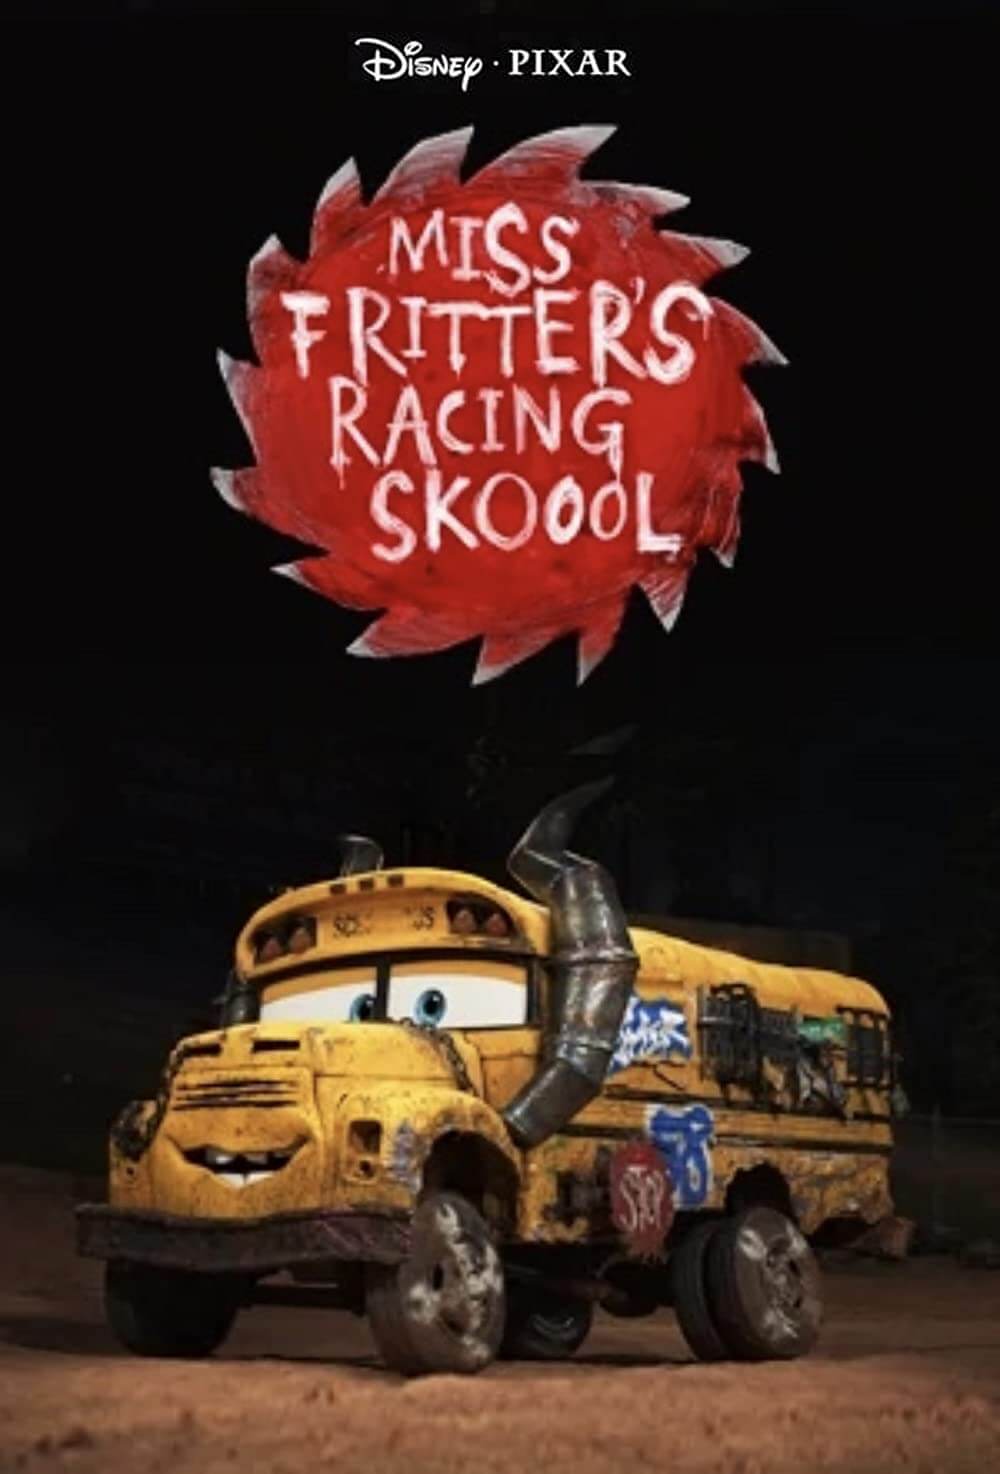 مدرسه رانندگی خانم فریتر (Miss Fritter’s Racing Skoool)